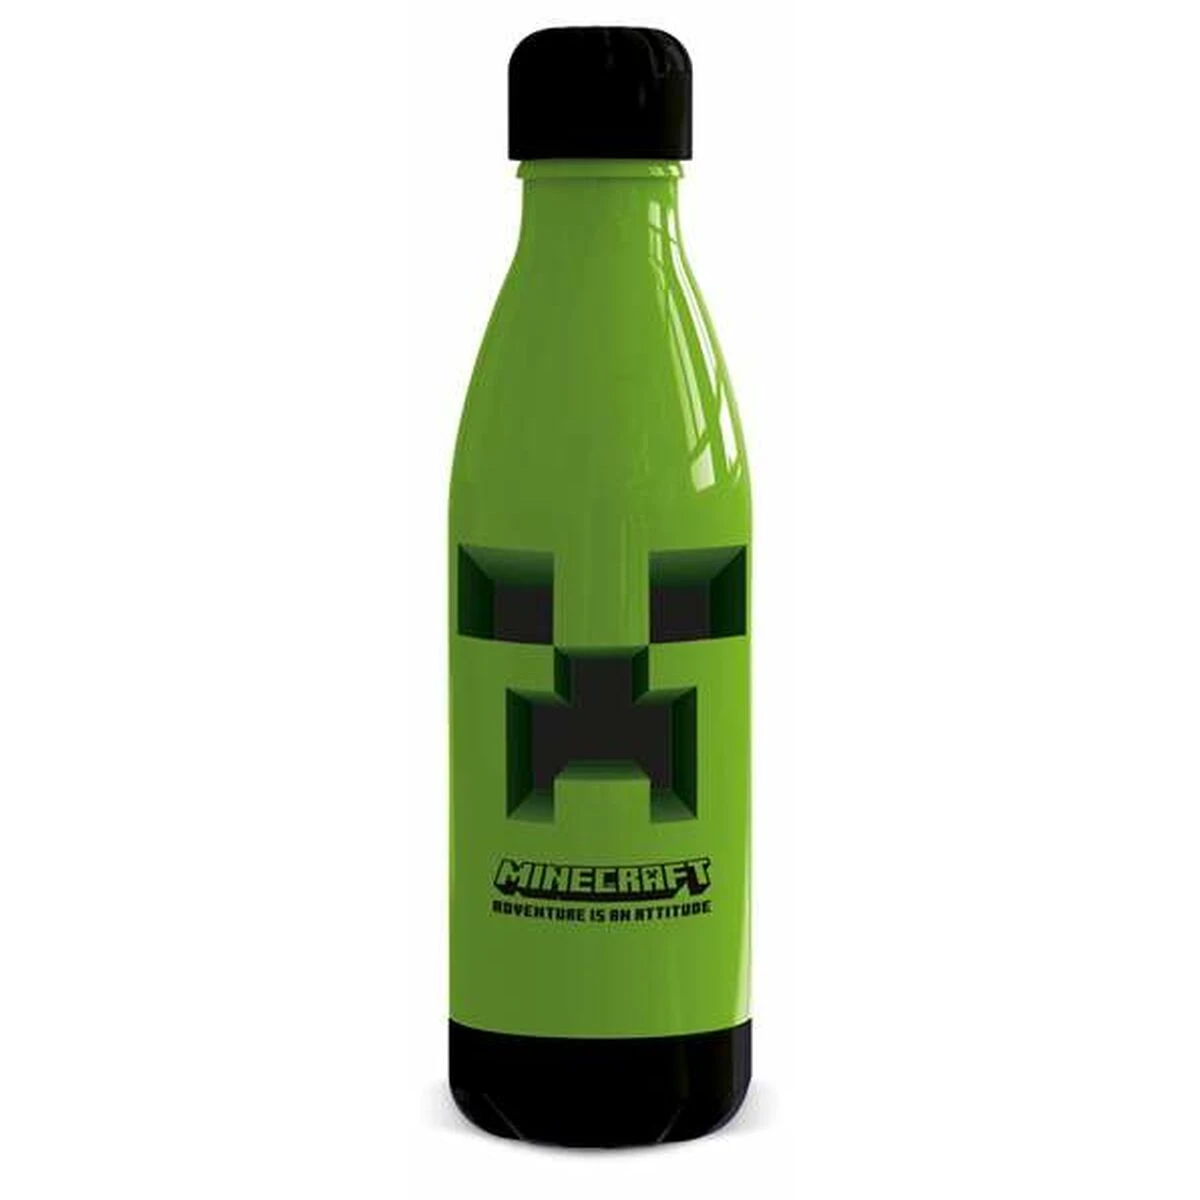 Minecraft logo on bottle.